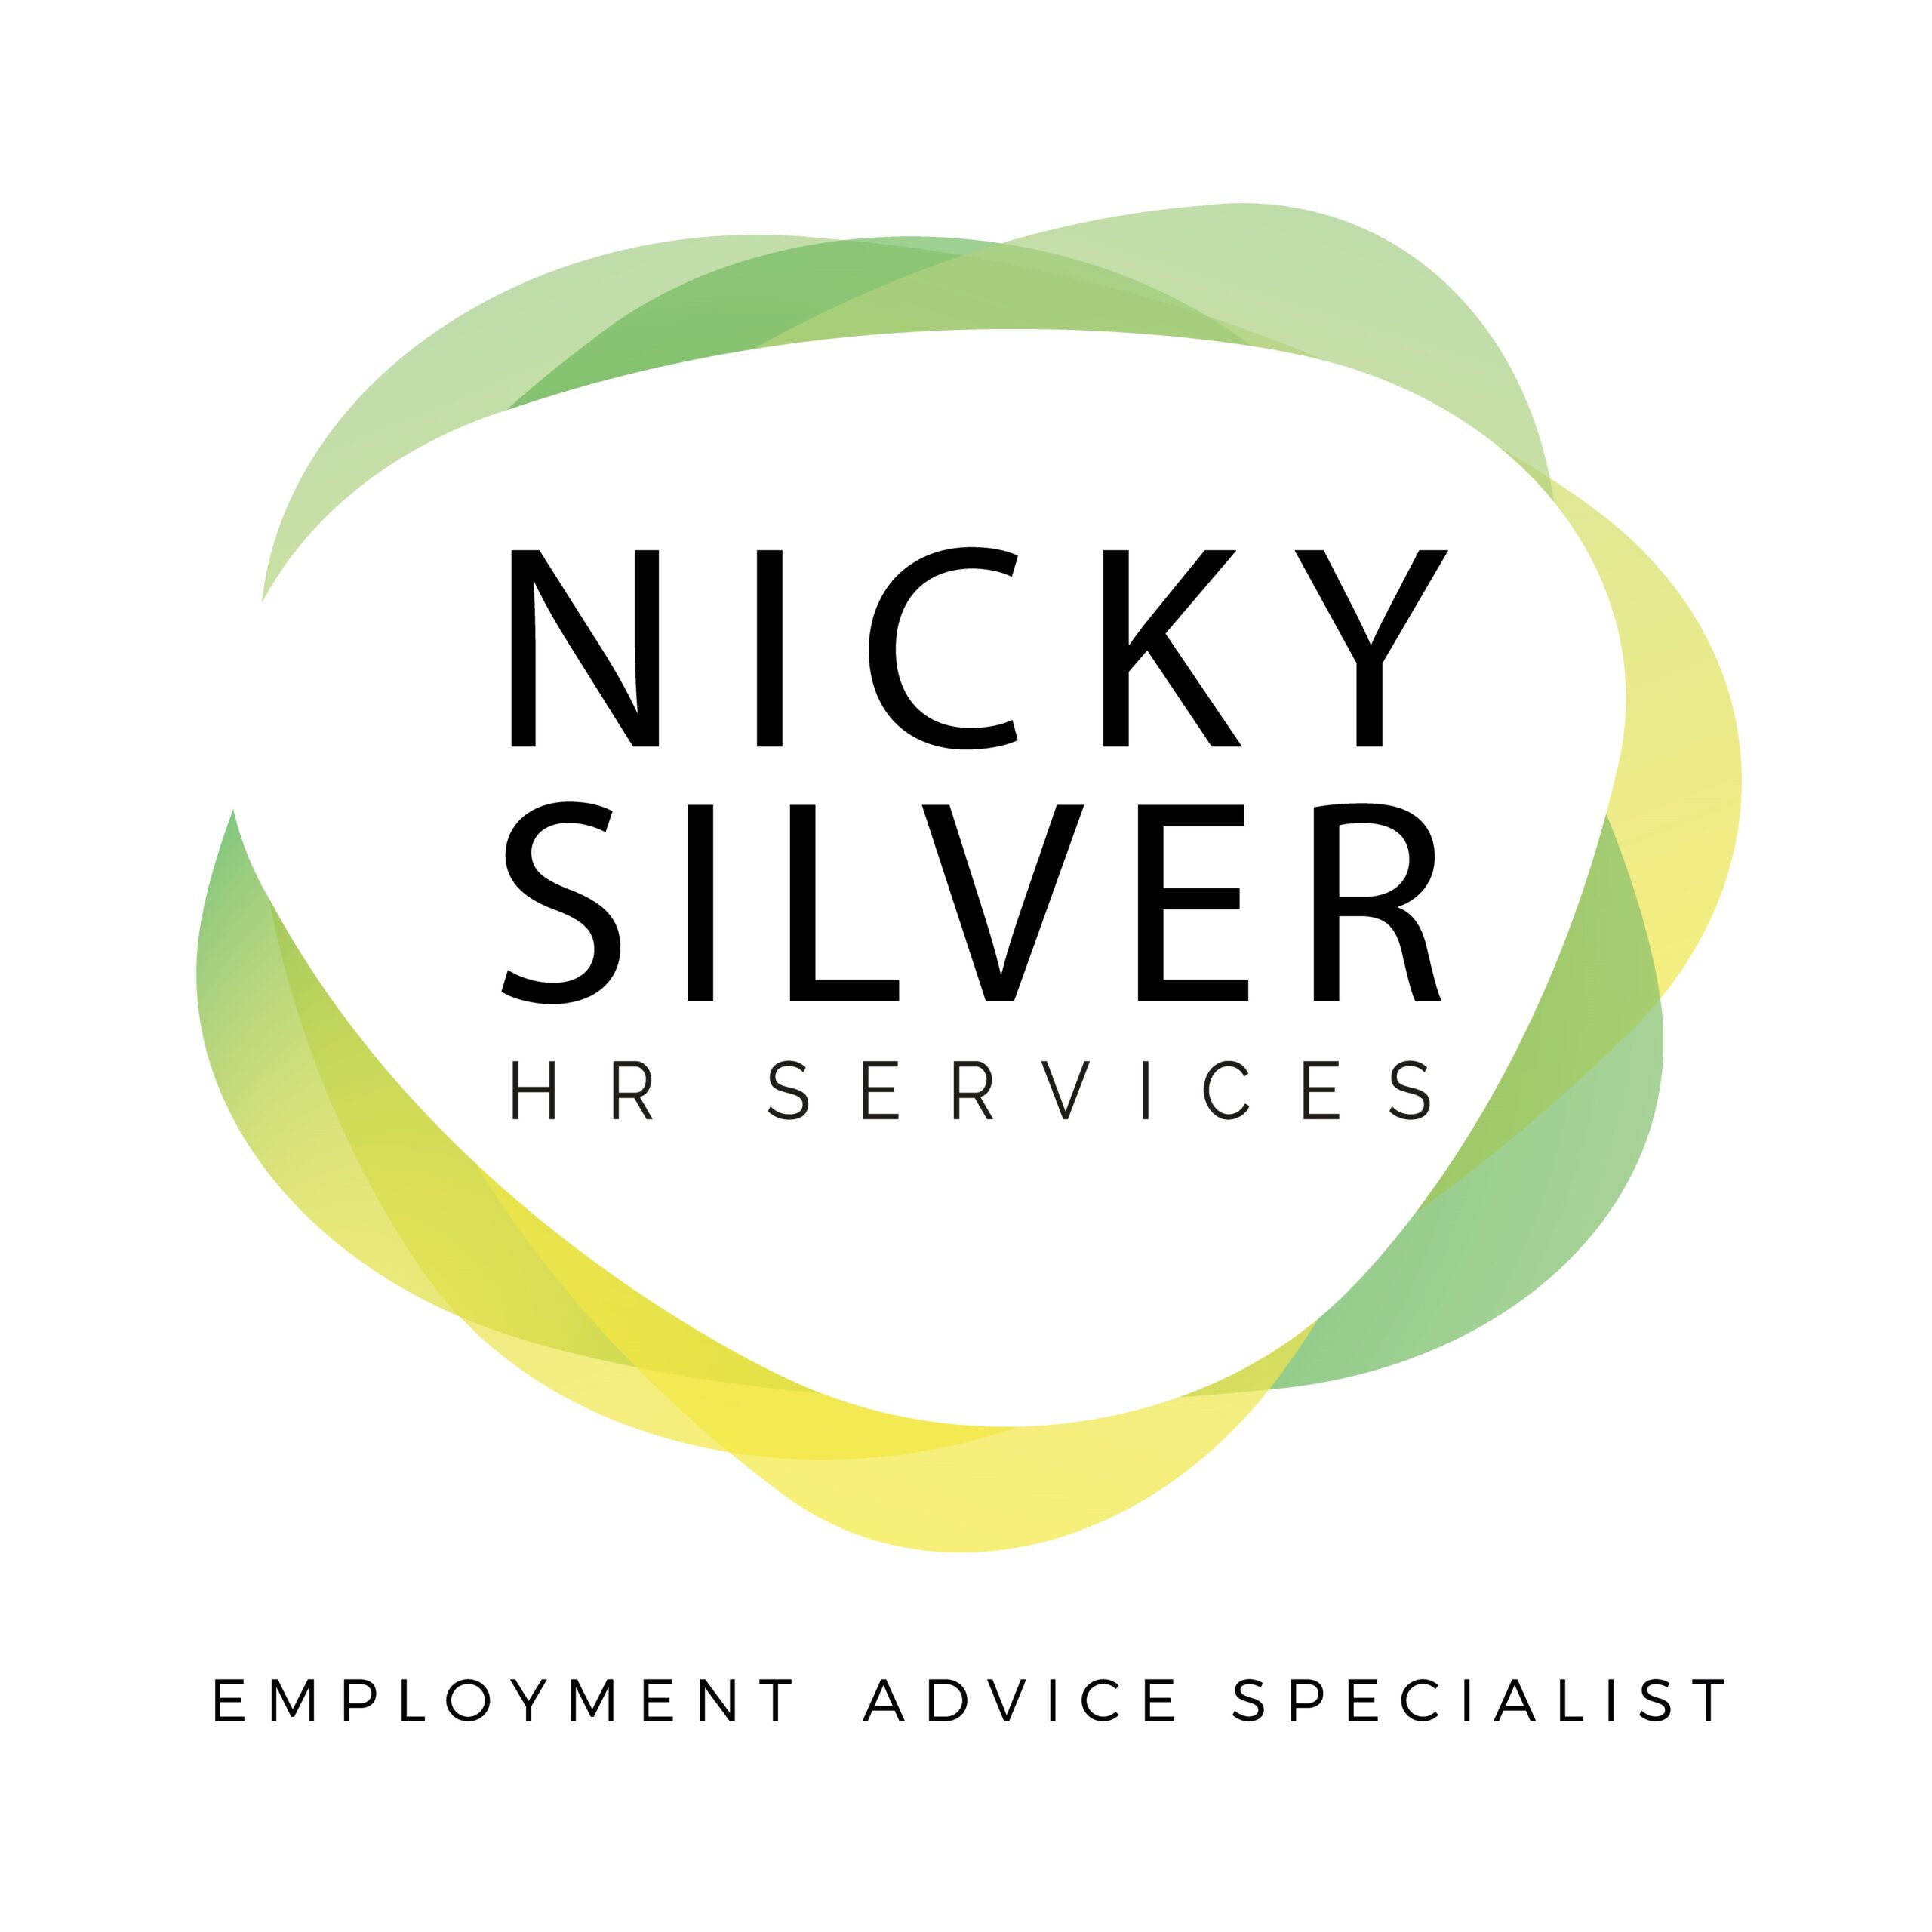 Nicky Silver HR Services